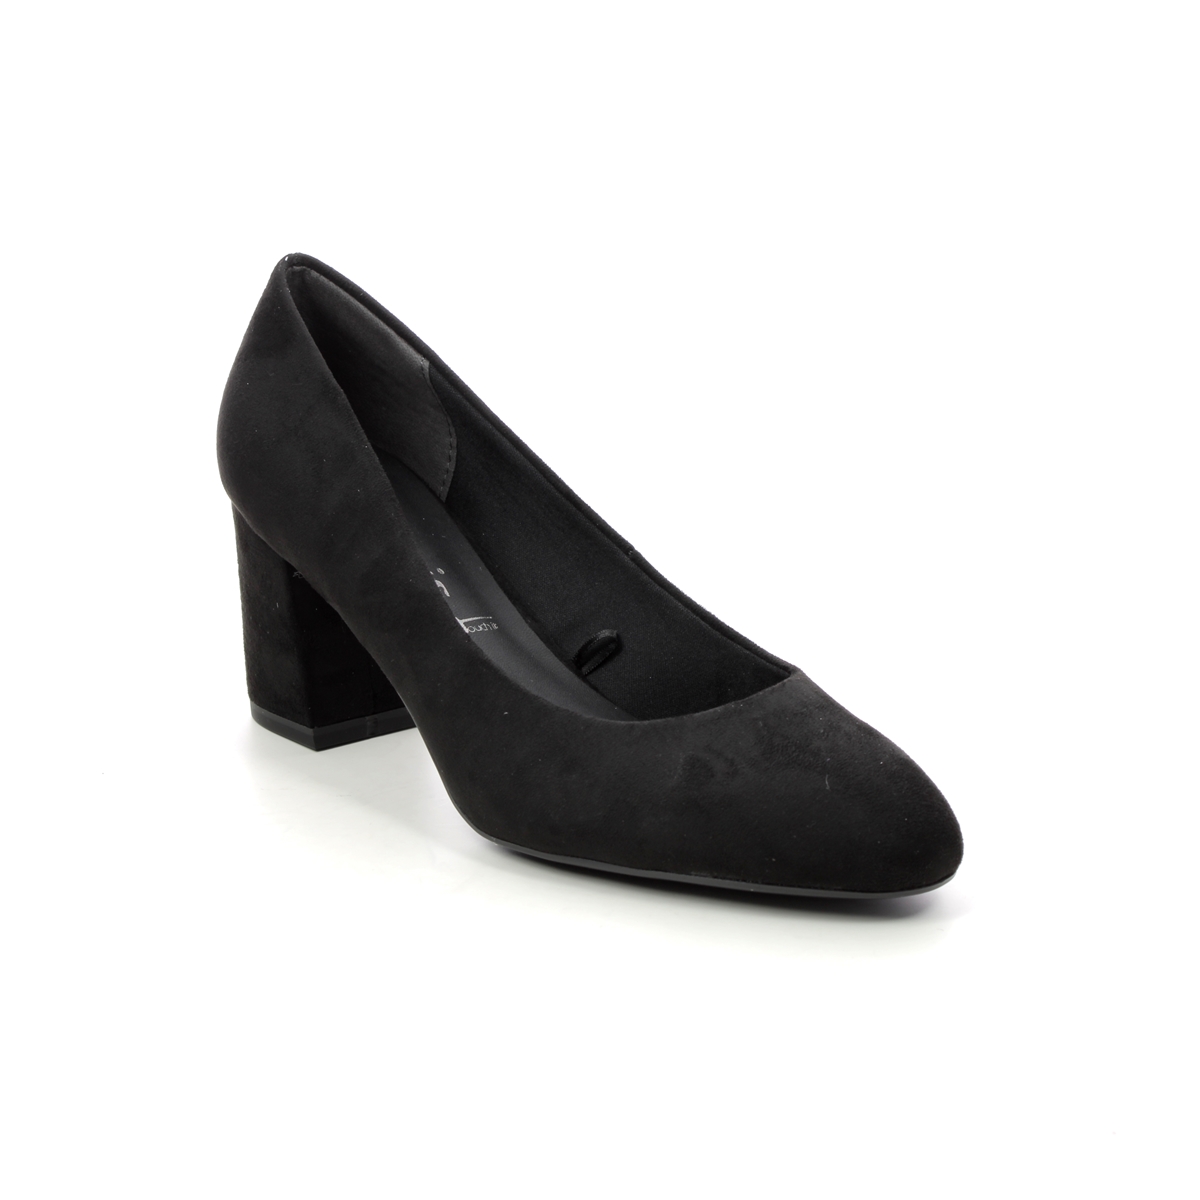 Tamaris Rosalyn Block Black Womens Court Shoes 22407-20-001 in a Plain Textile in Size 40